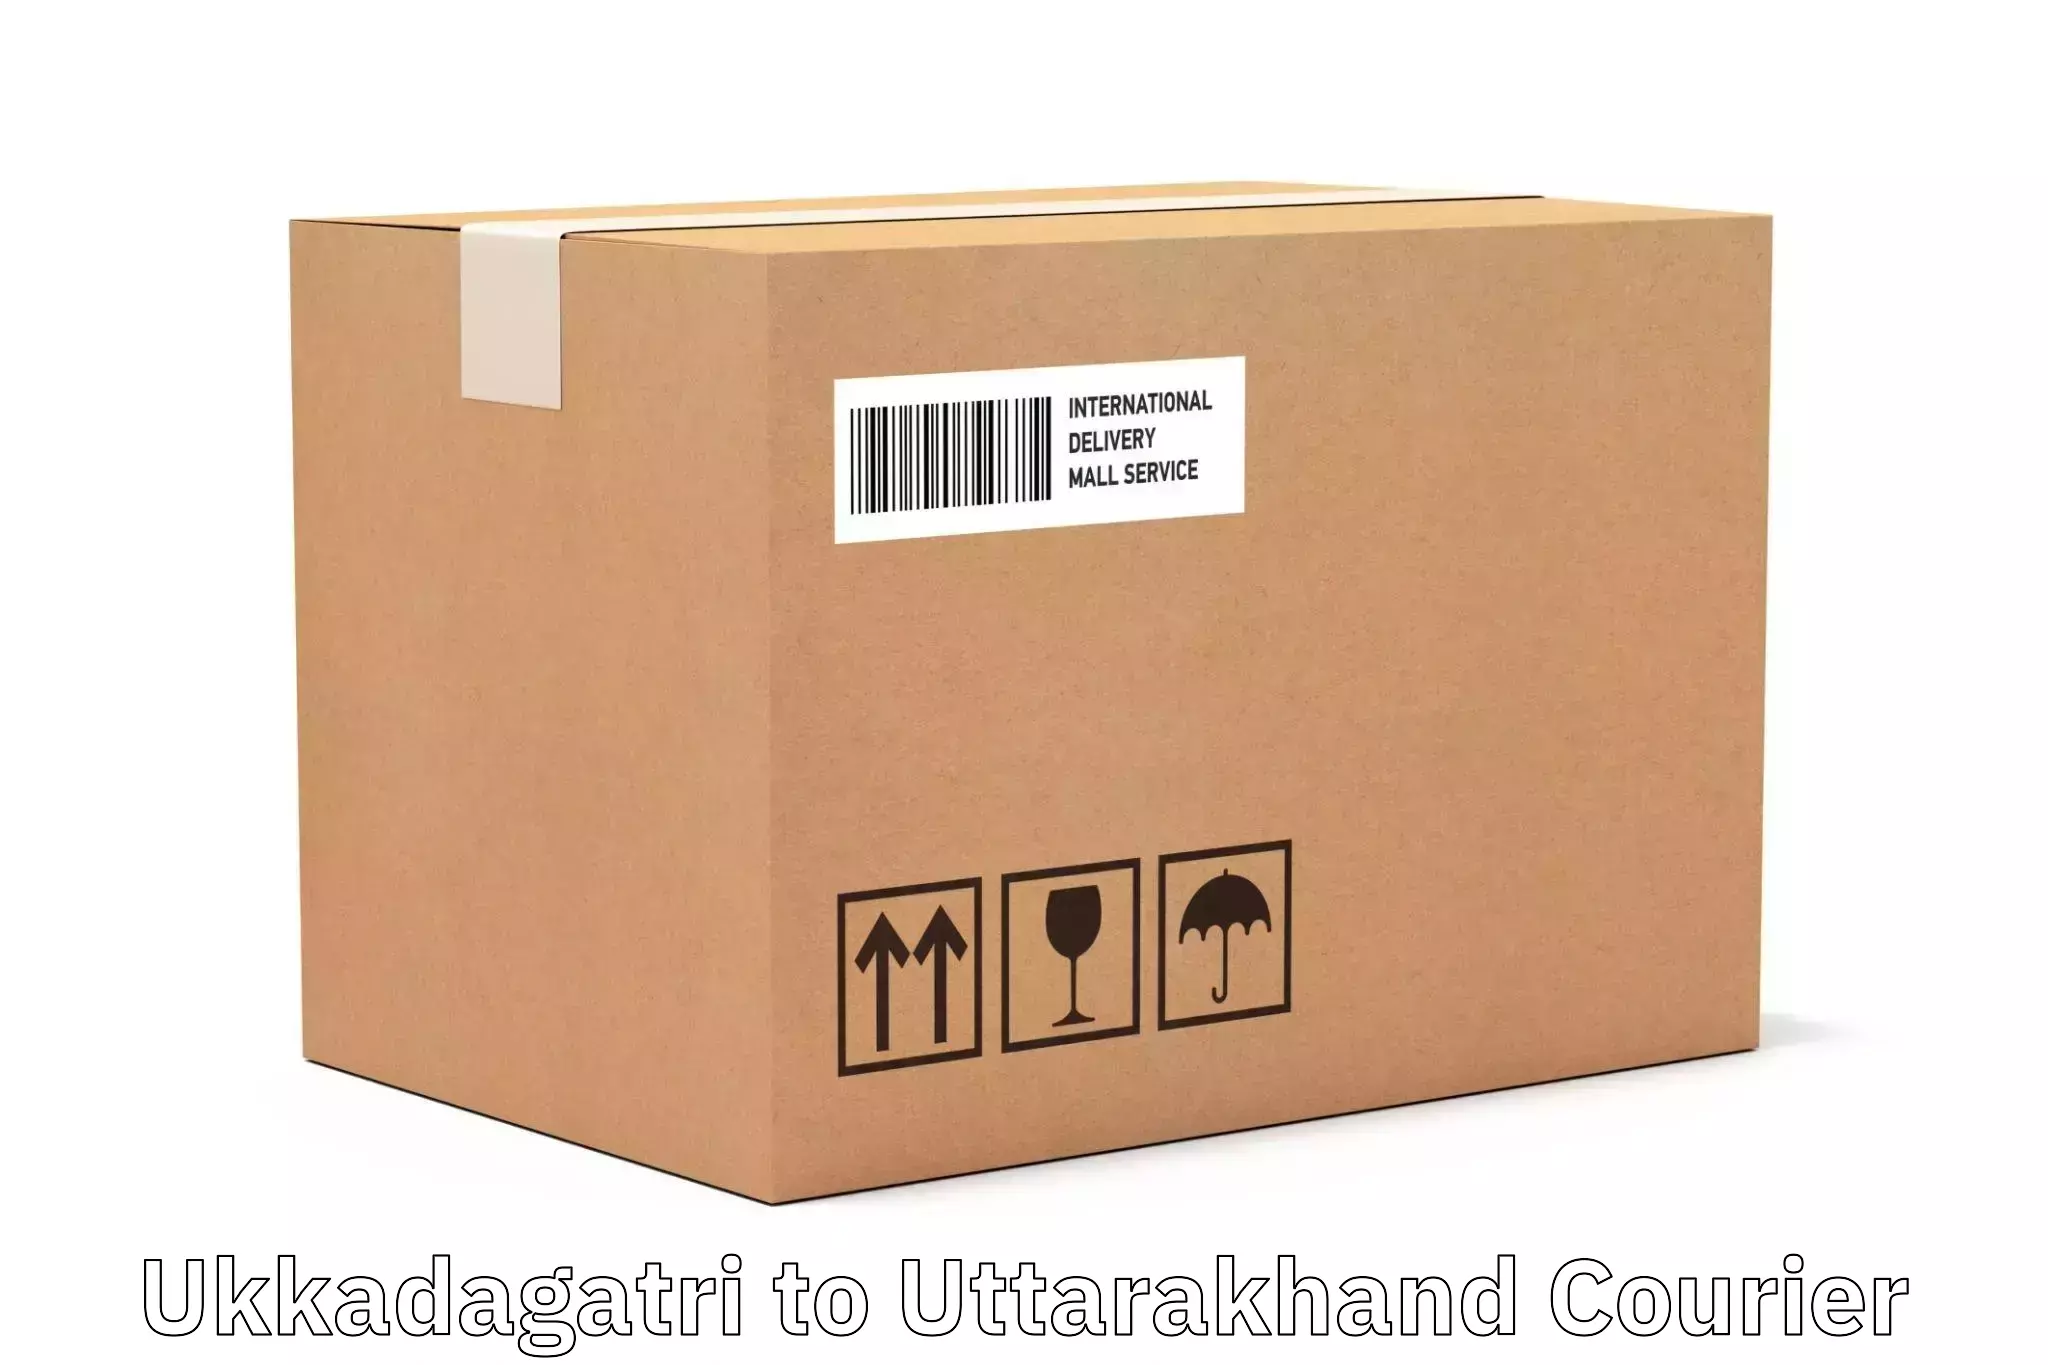 Global courier networks Ukkadagatri to Uttarakhand